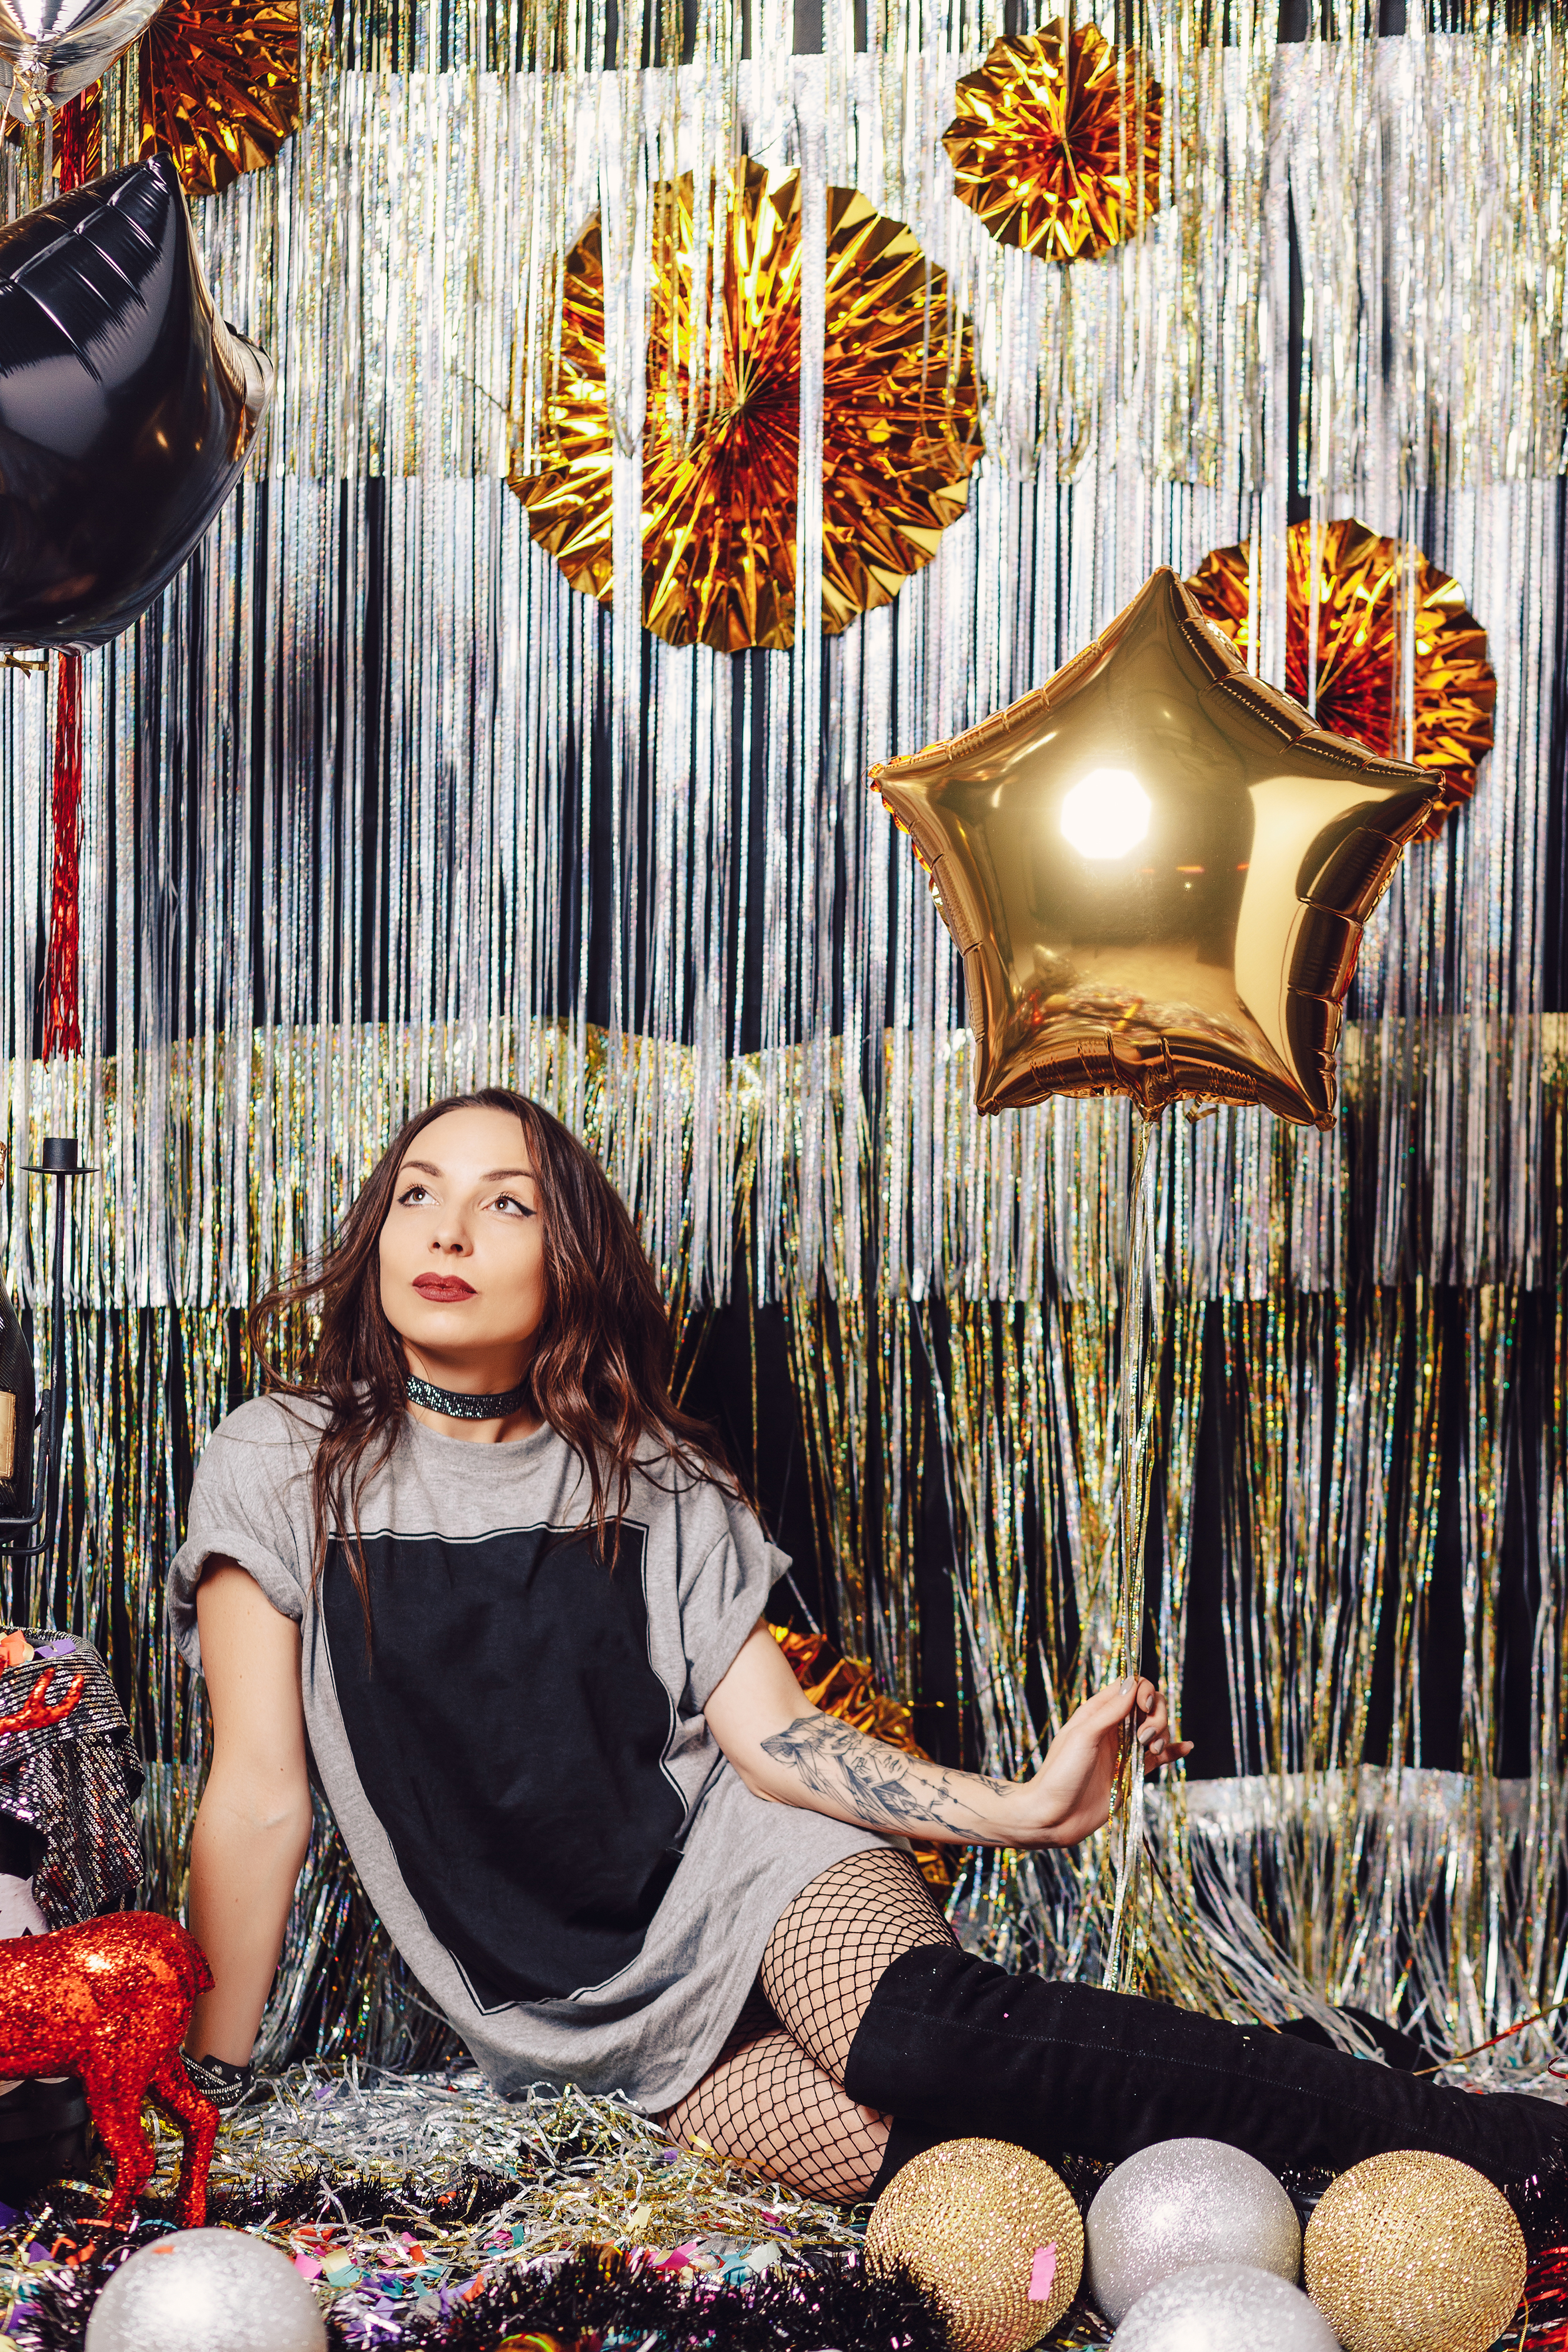 Teen girl in sitting against a birthday party backdrop with metallic balloons | Source: ArthurHidden on Freepik